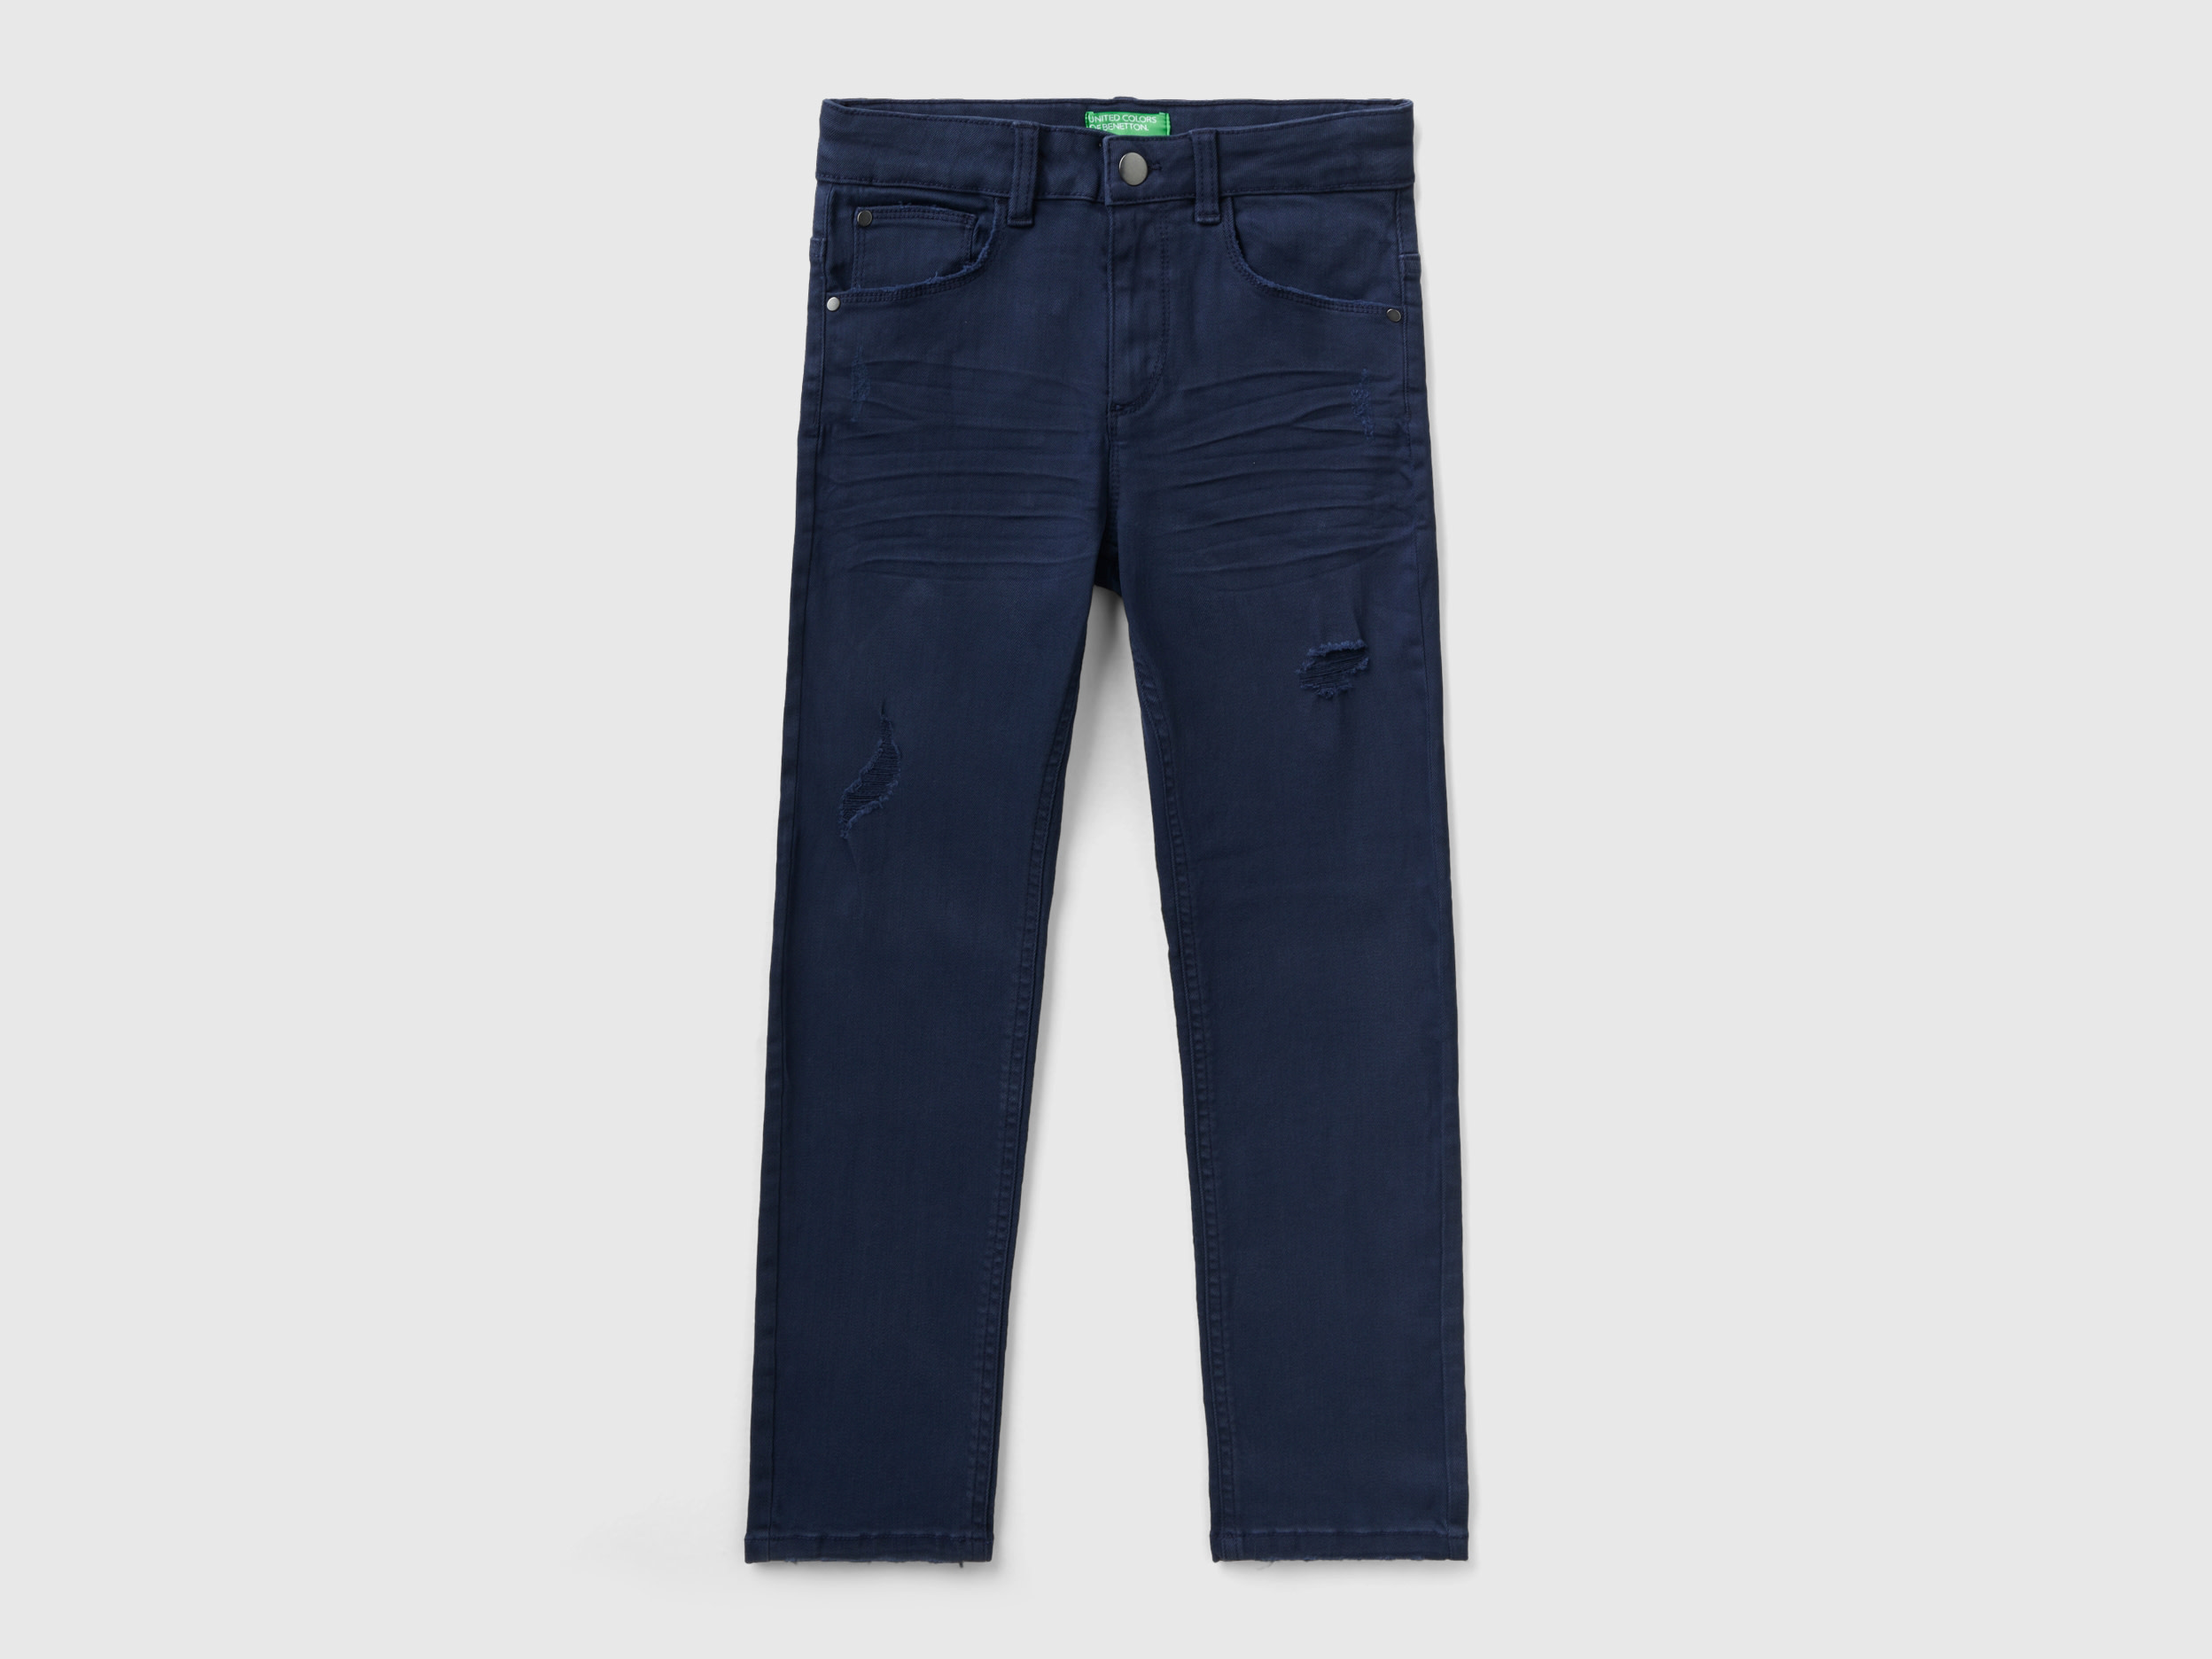 Benetton, Stretch Jeans With Tears, size XL, Dark Blue, Kids